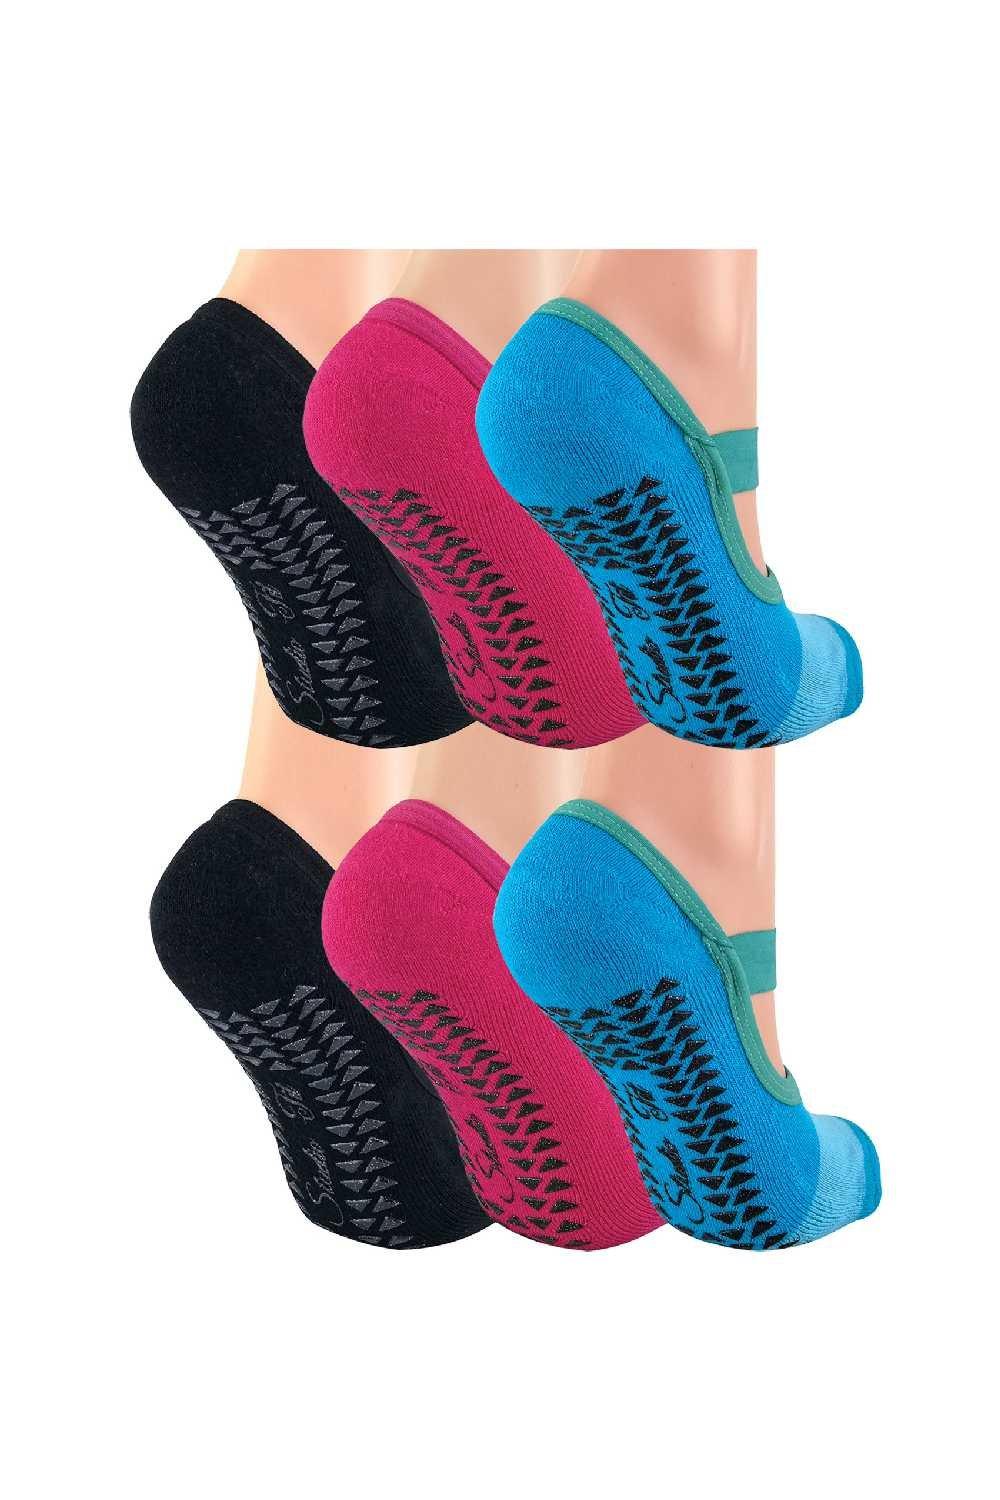 6 Pairs Invisible Yoga Socks with Straps - Non Slip Cotton Socks